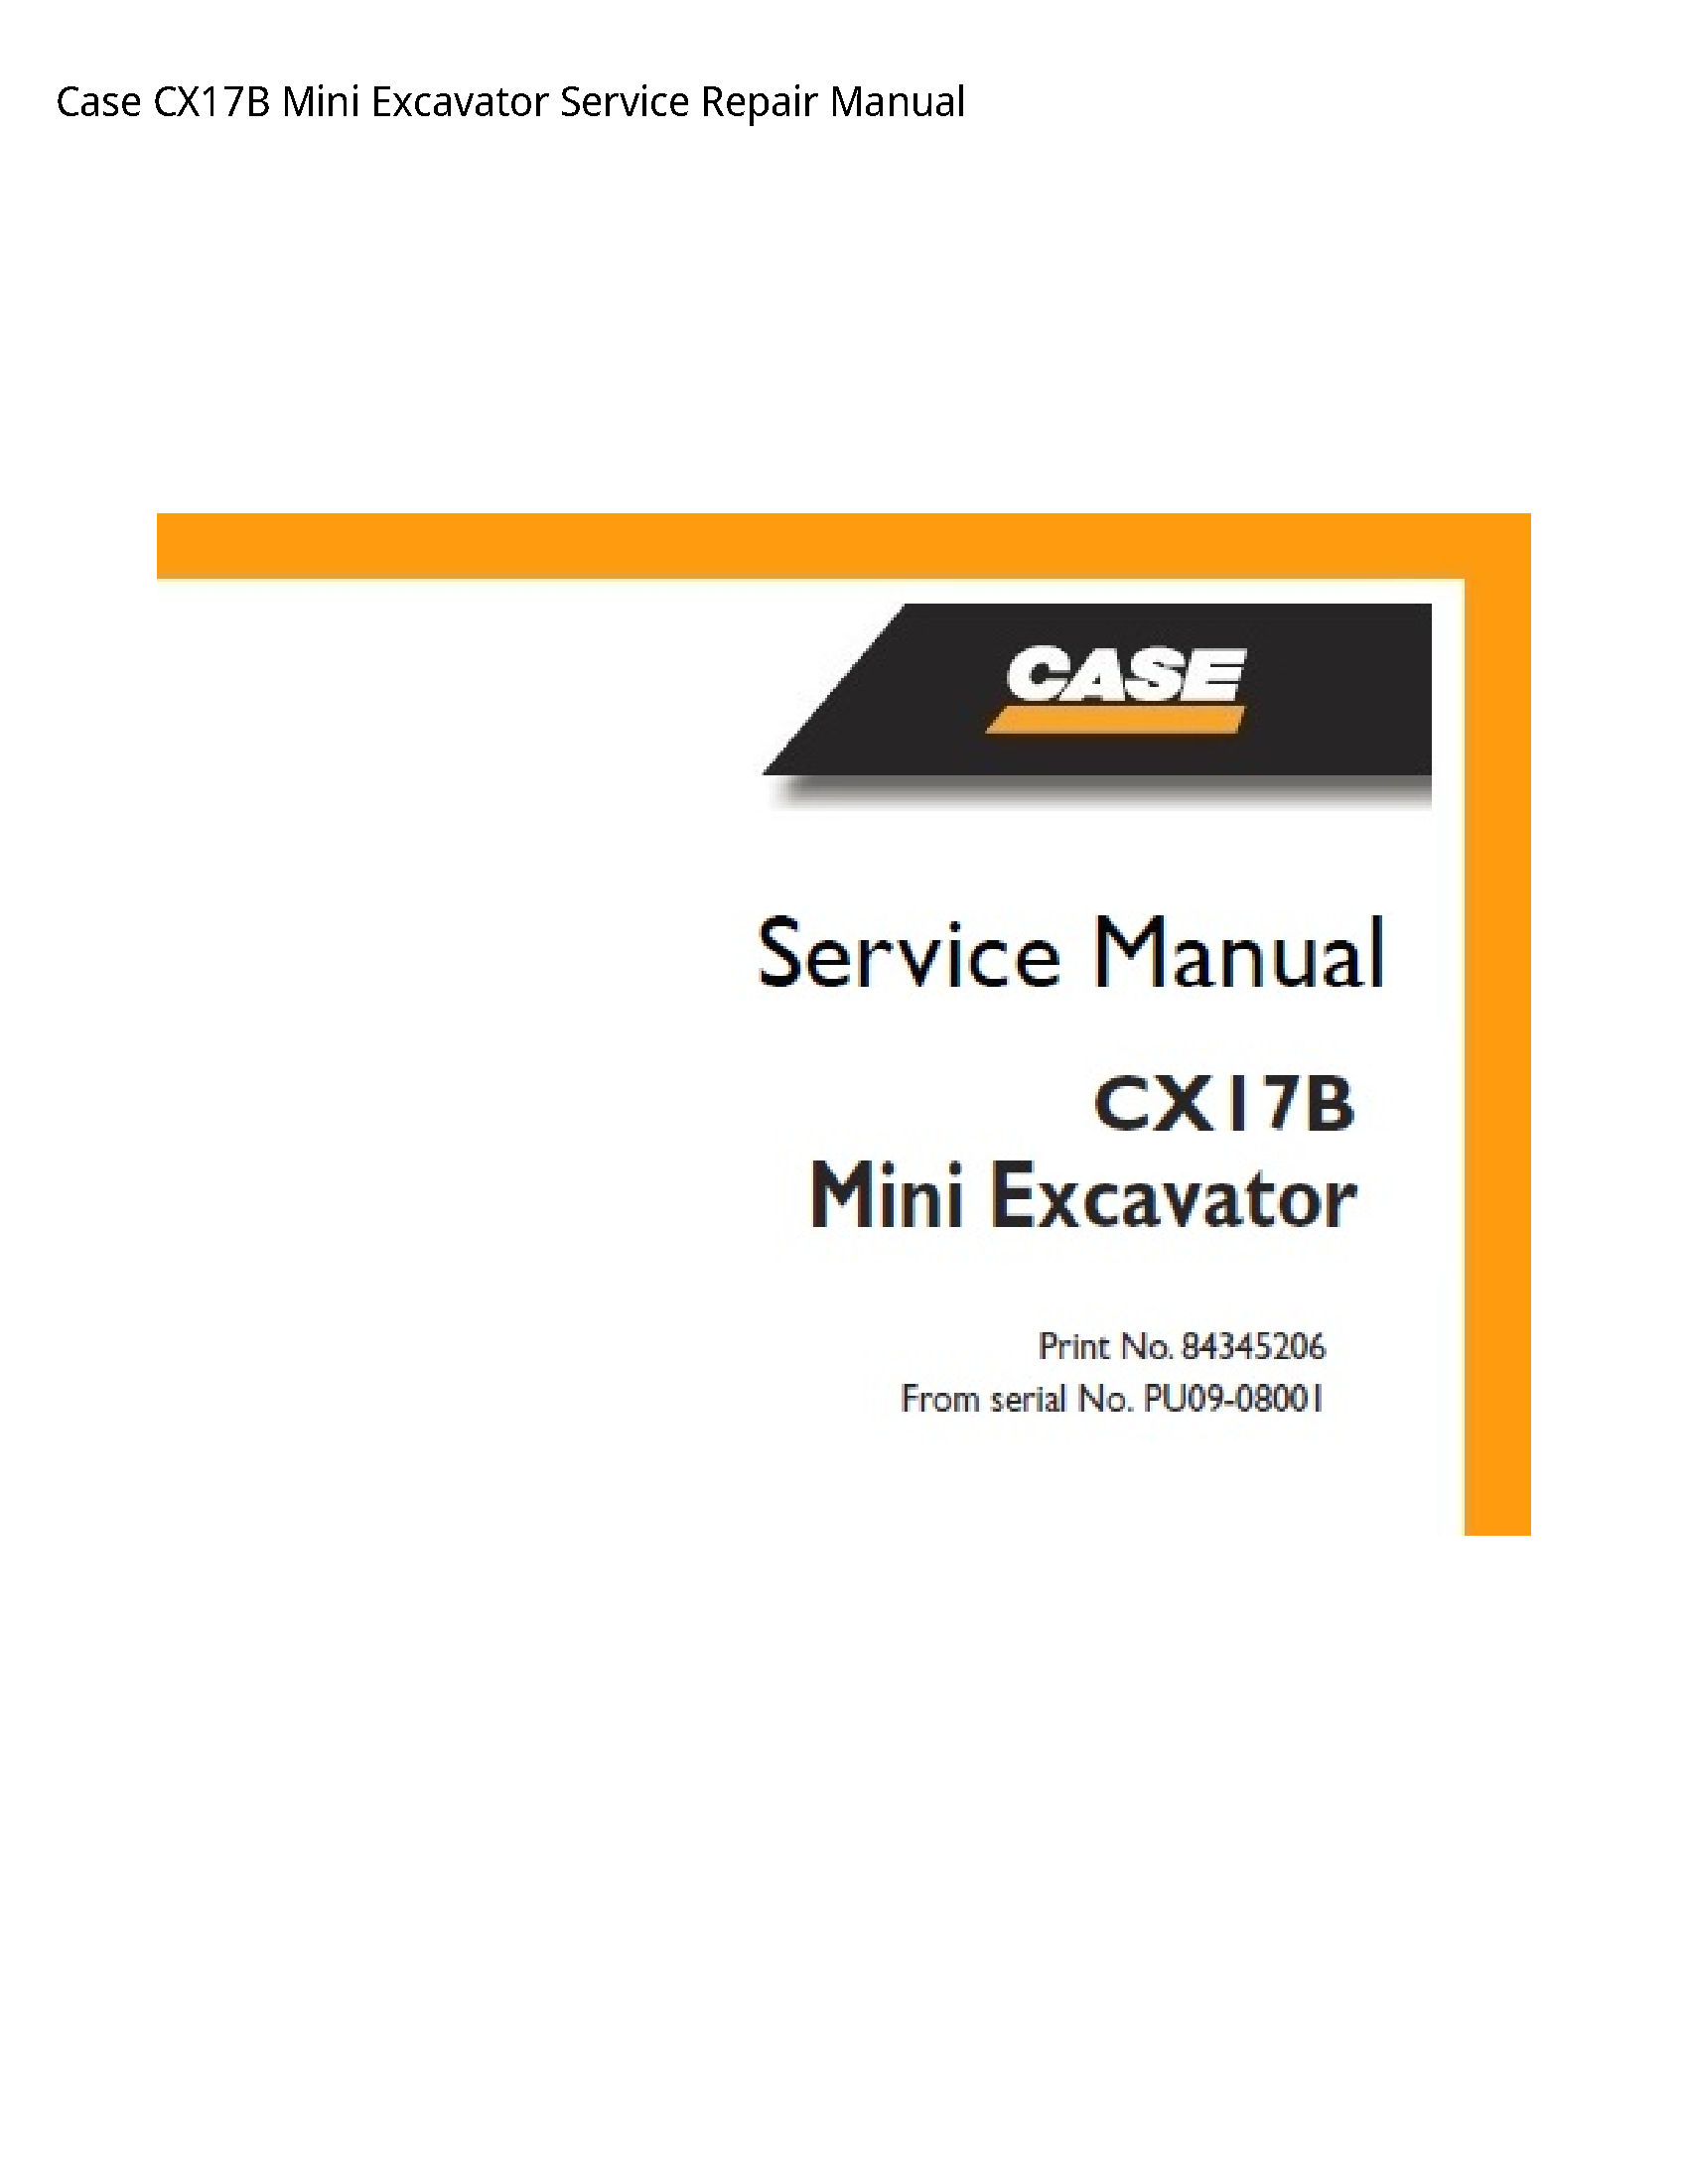 Case/Case IH CX17B Mini Excavator manual